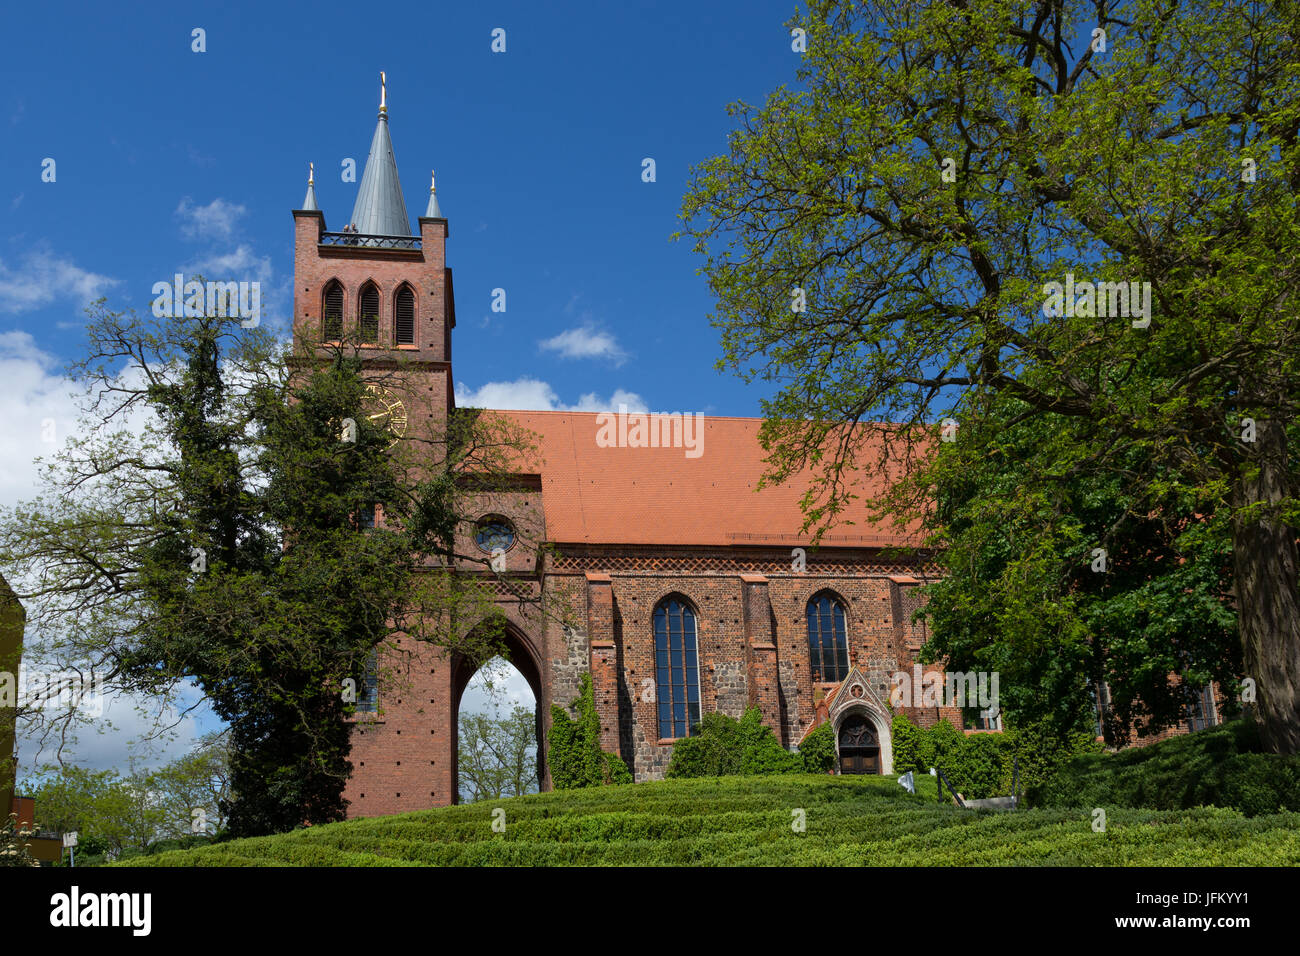 City church of Muencheberg Stock Photo